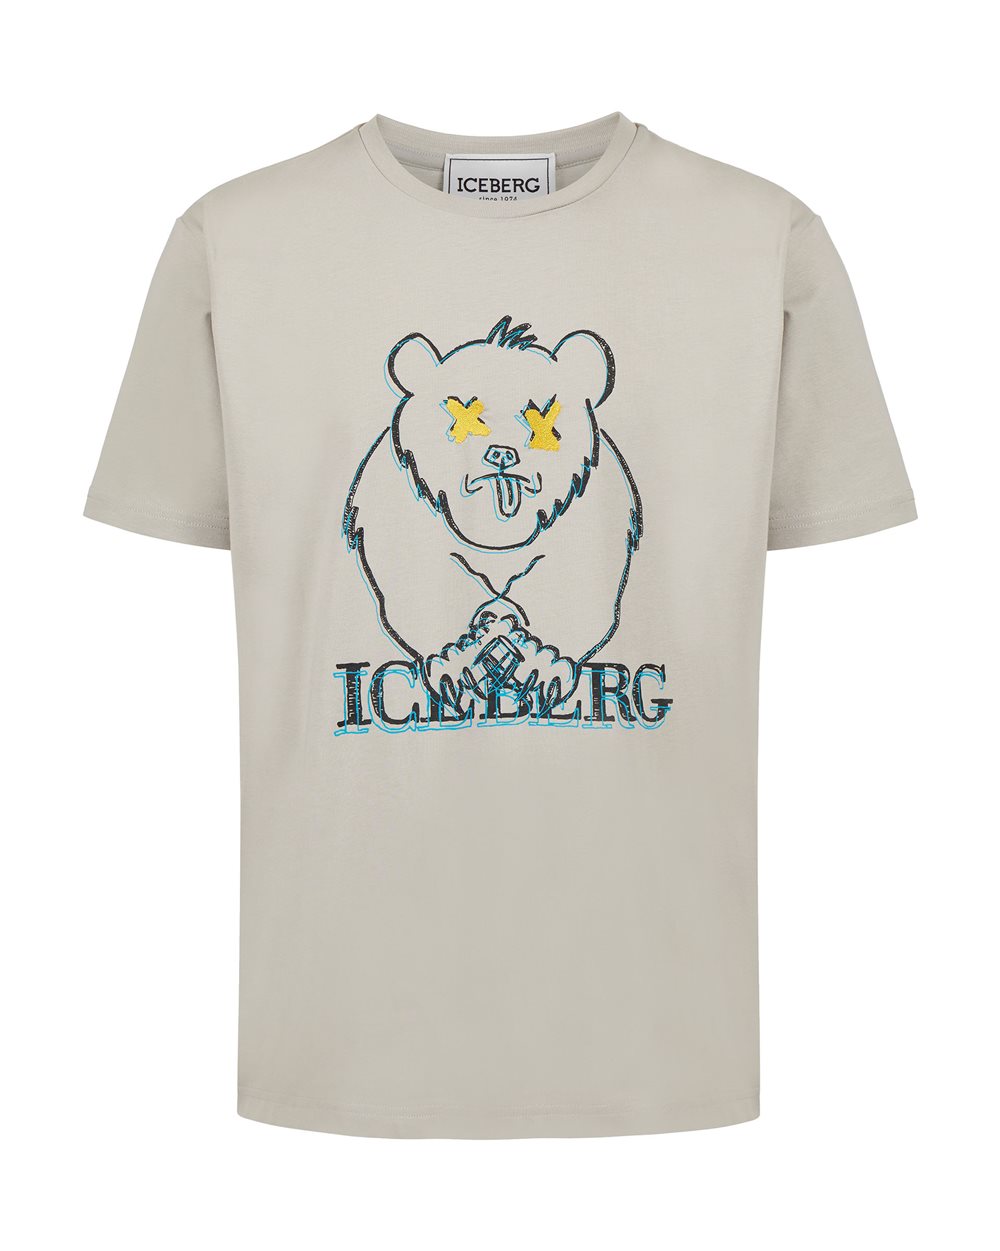 T-shirt with cartoon graphics and logo - Iceberg Cartoon | Iceberg - Official Website